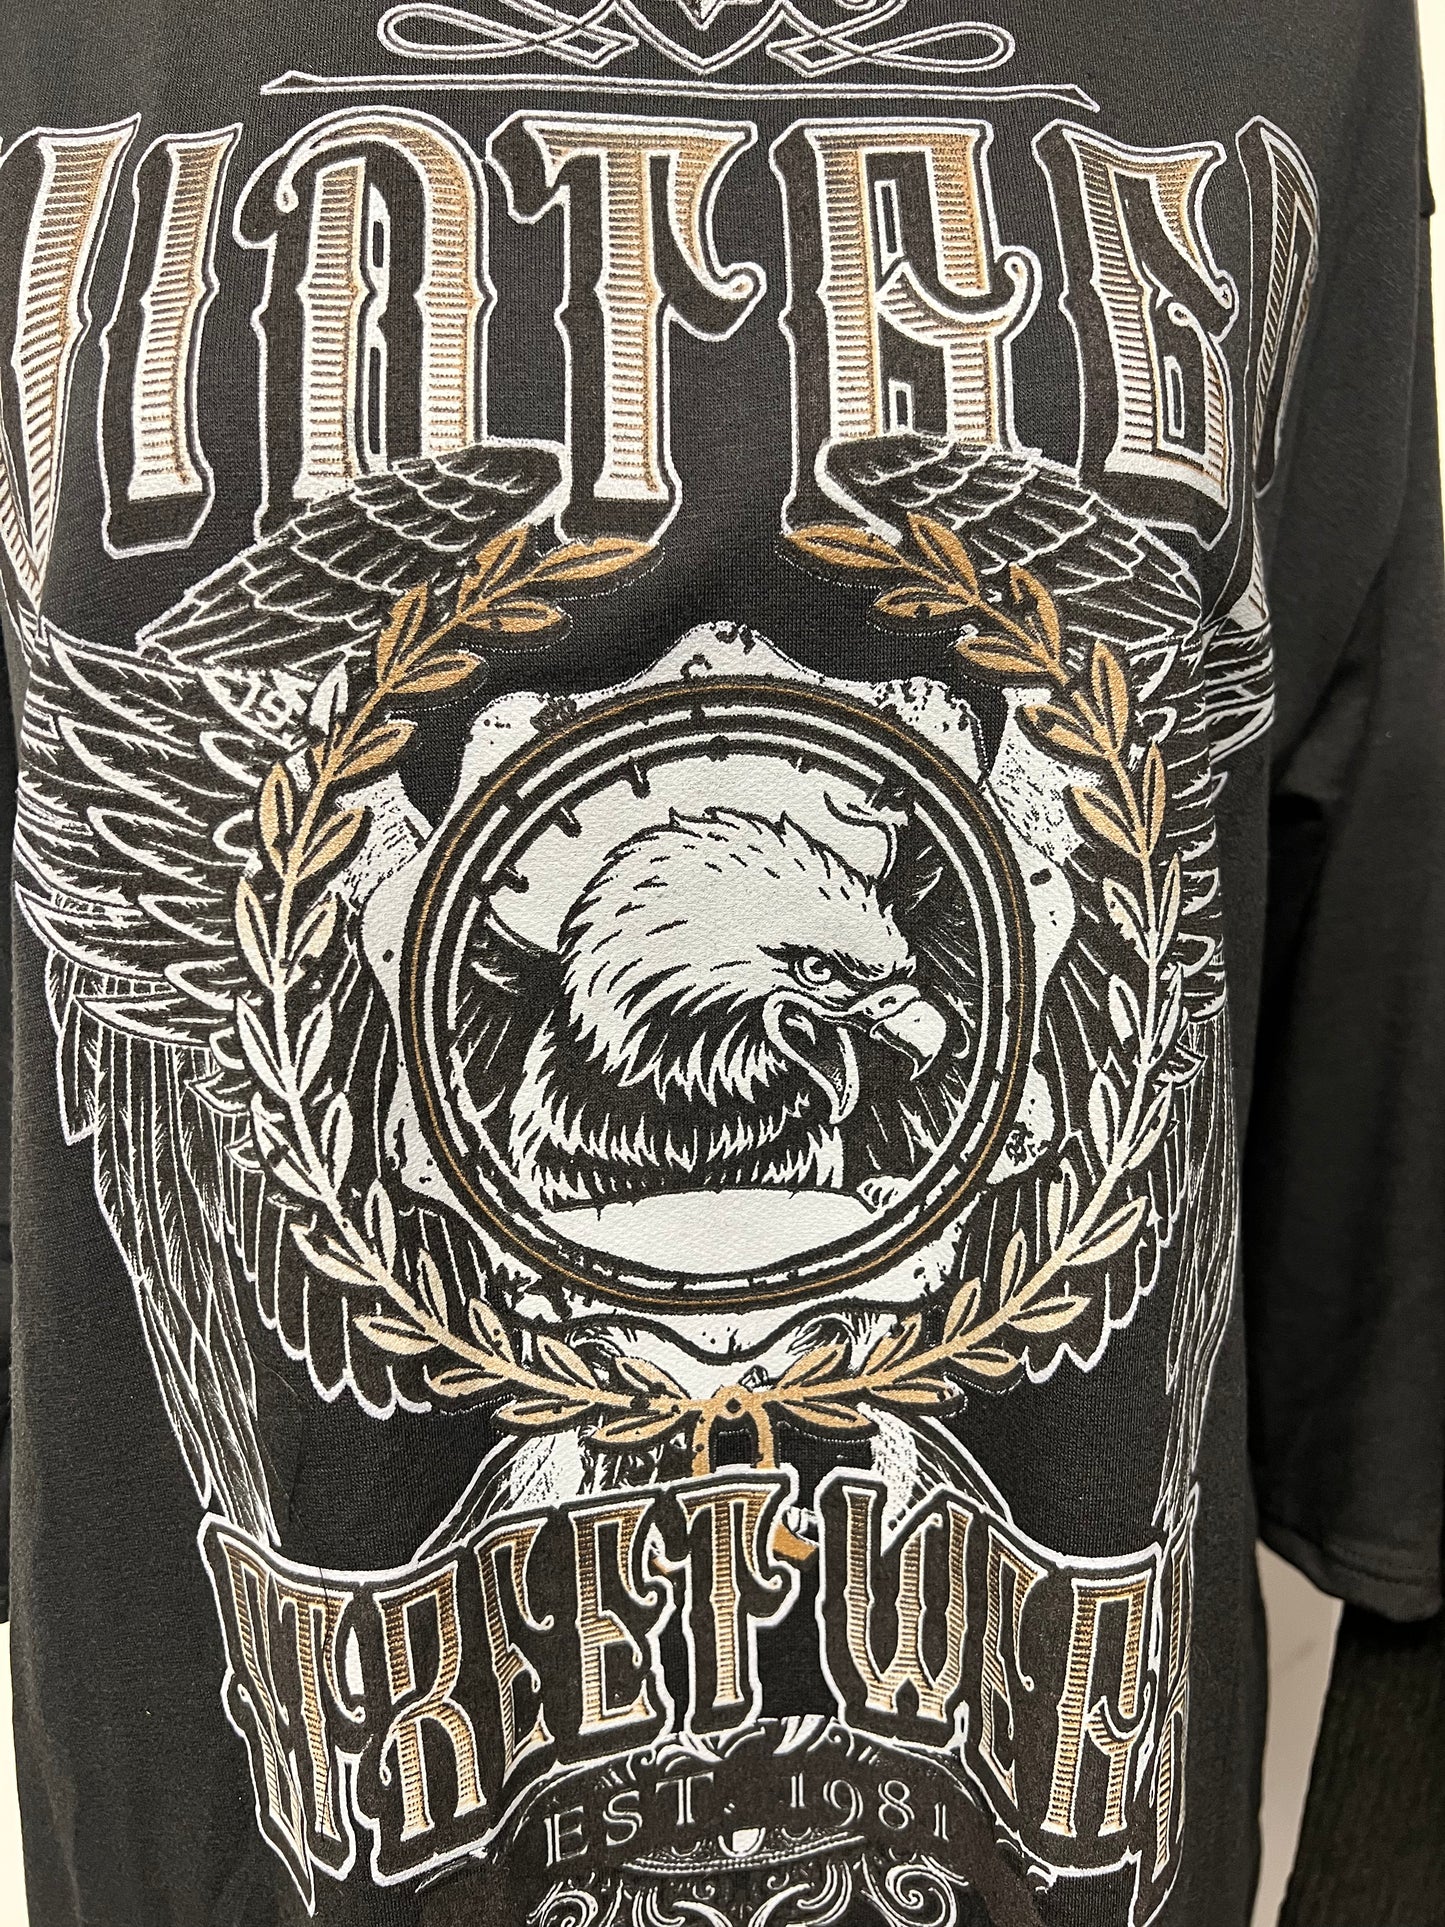 “Eagles” T-shirt graphic dress